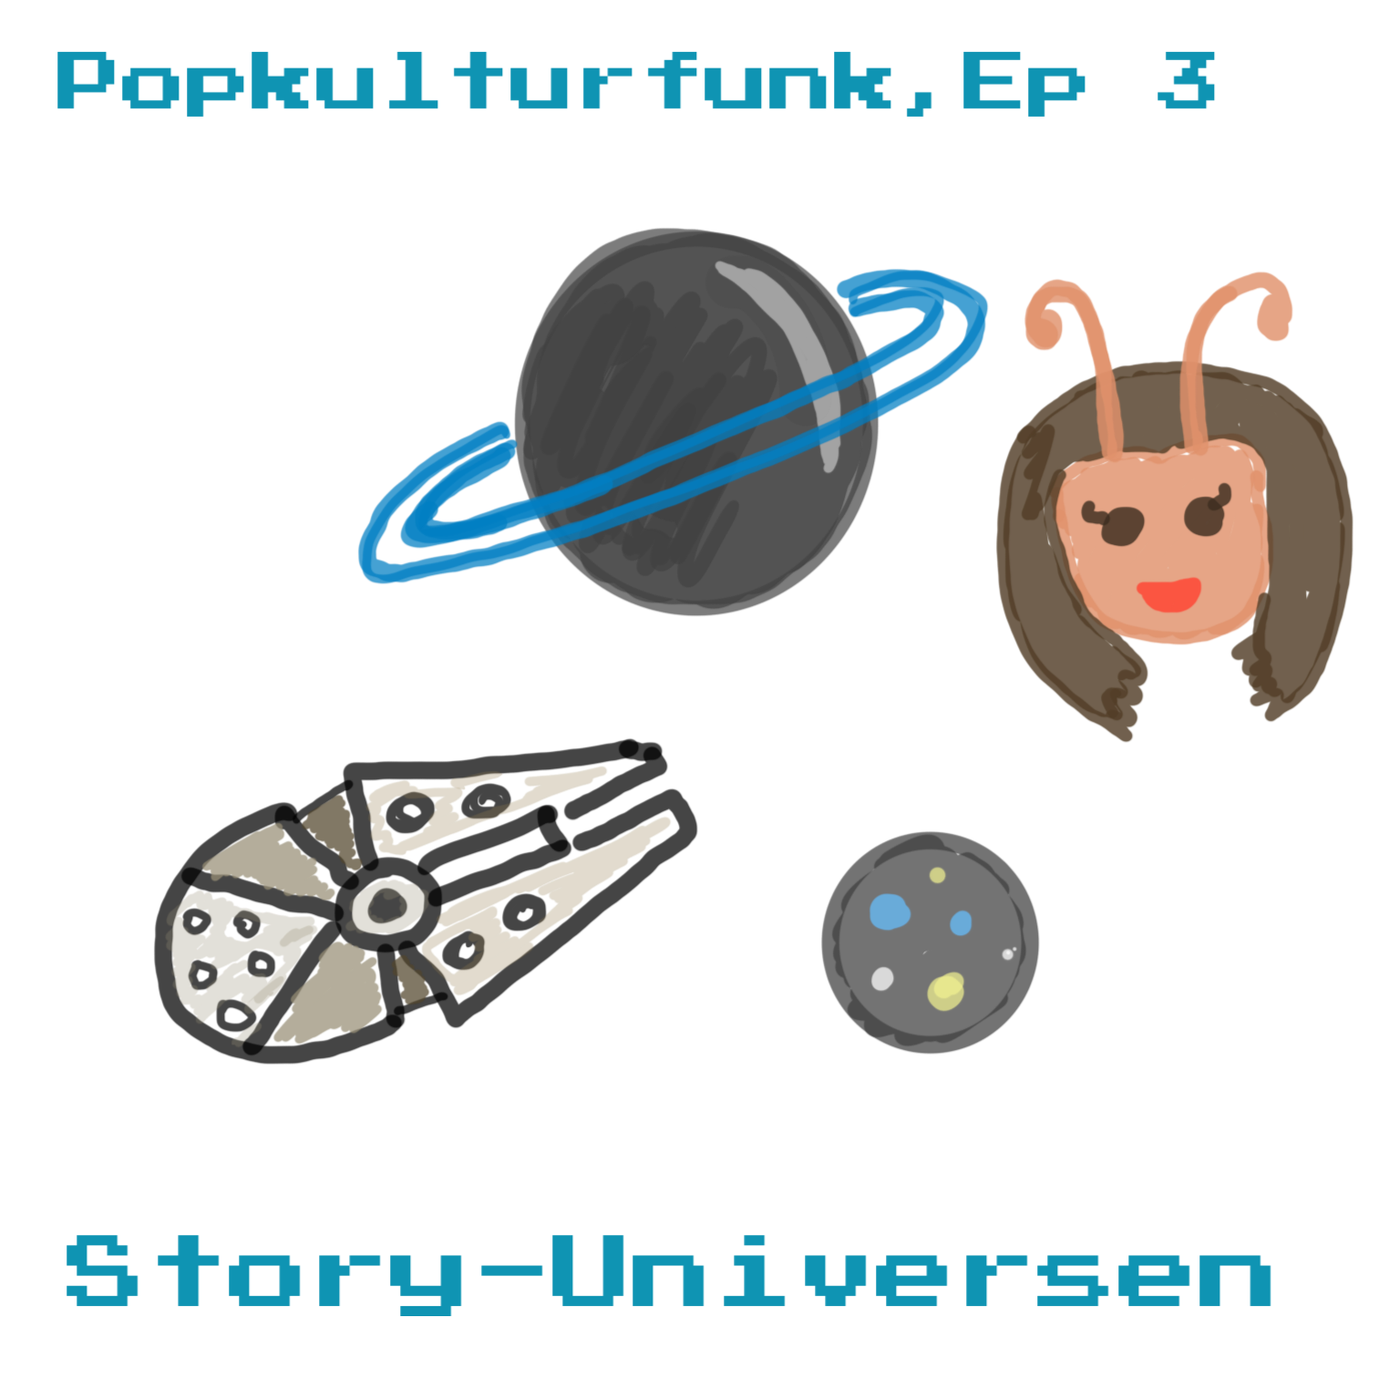 Episode 3: Story-Universen